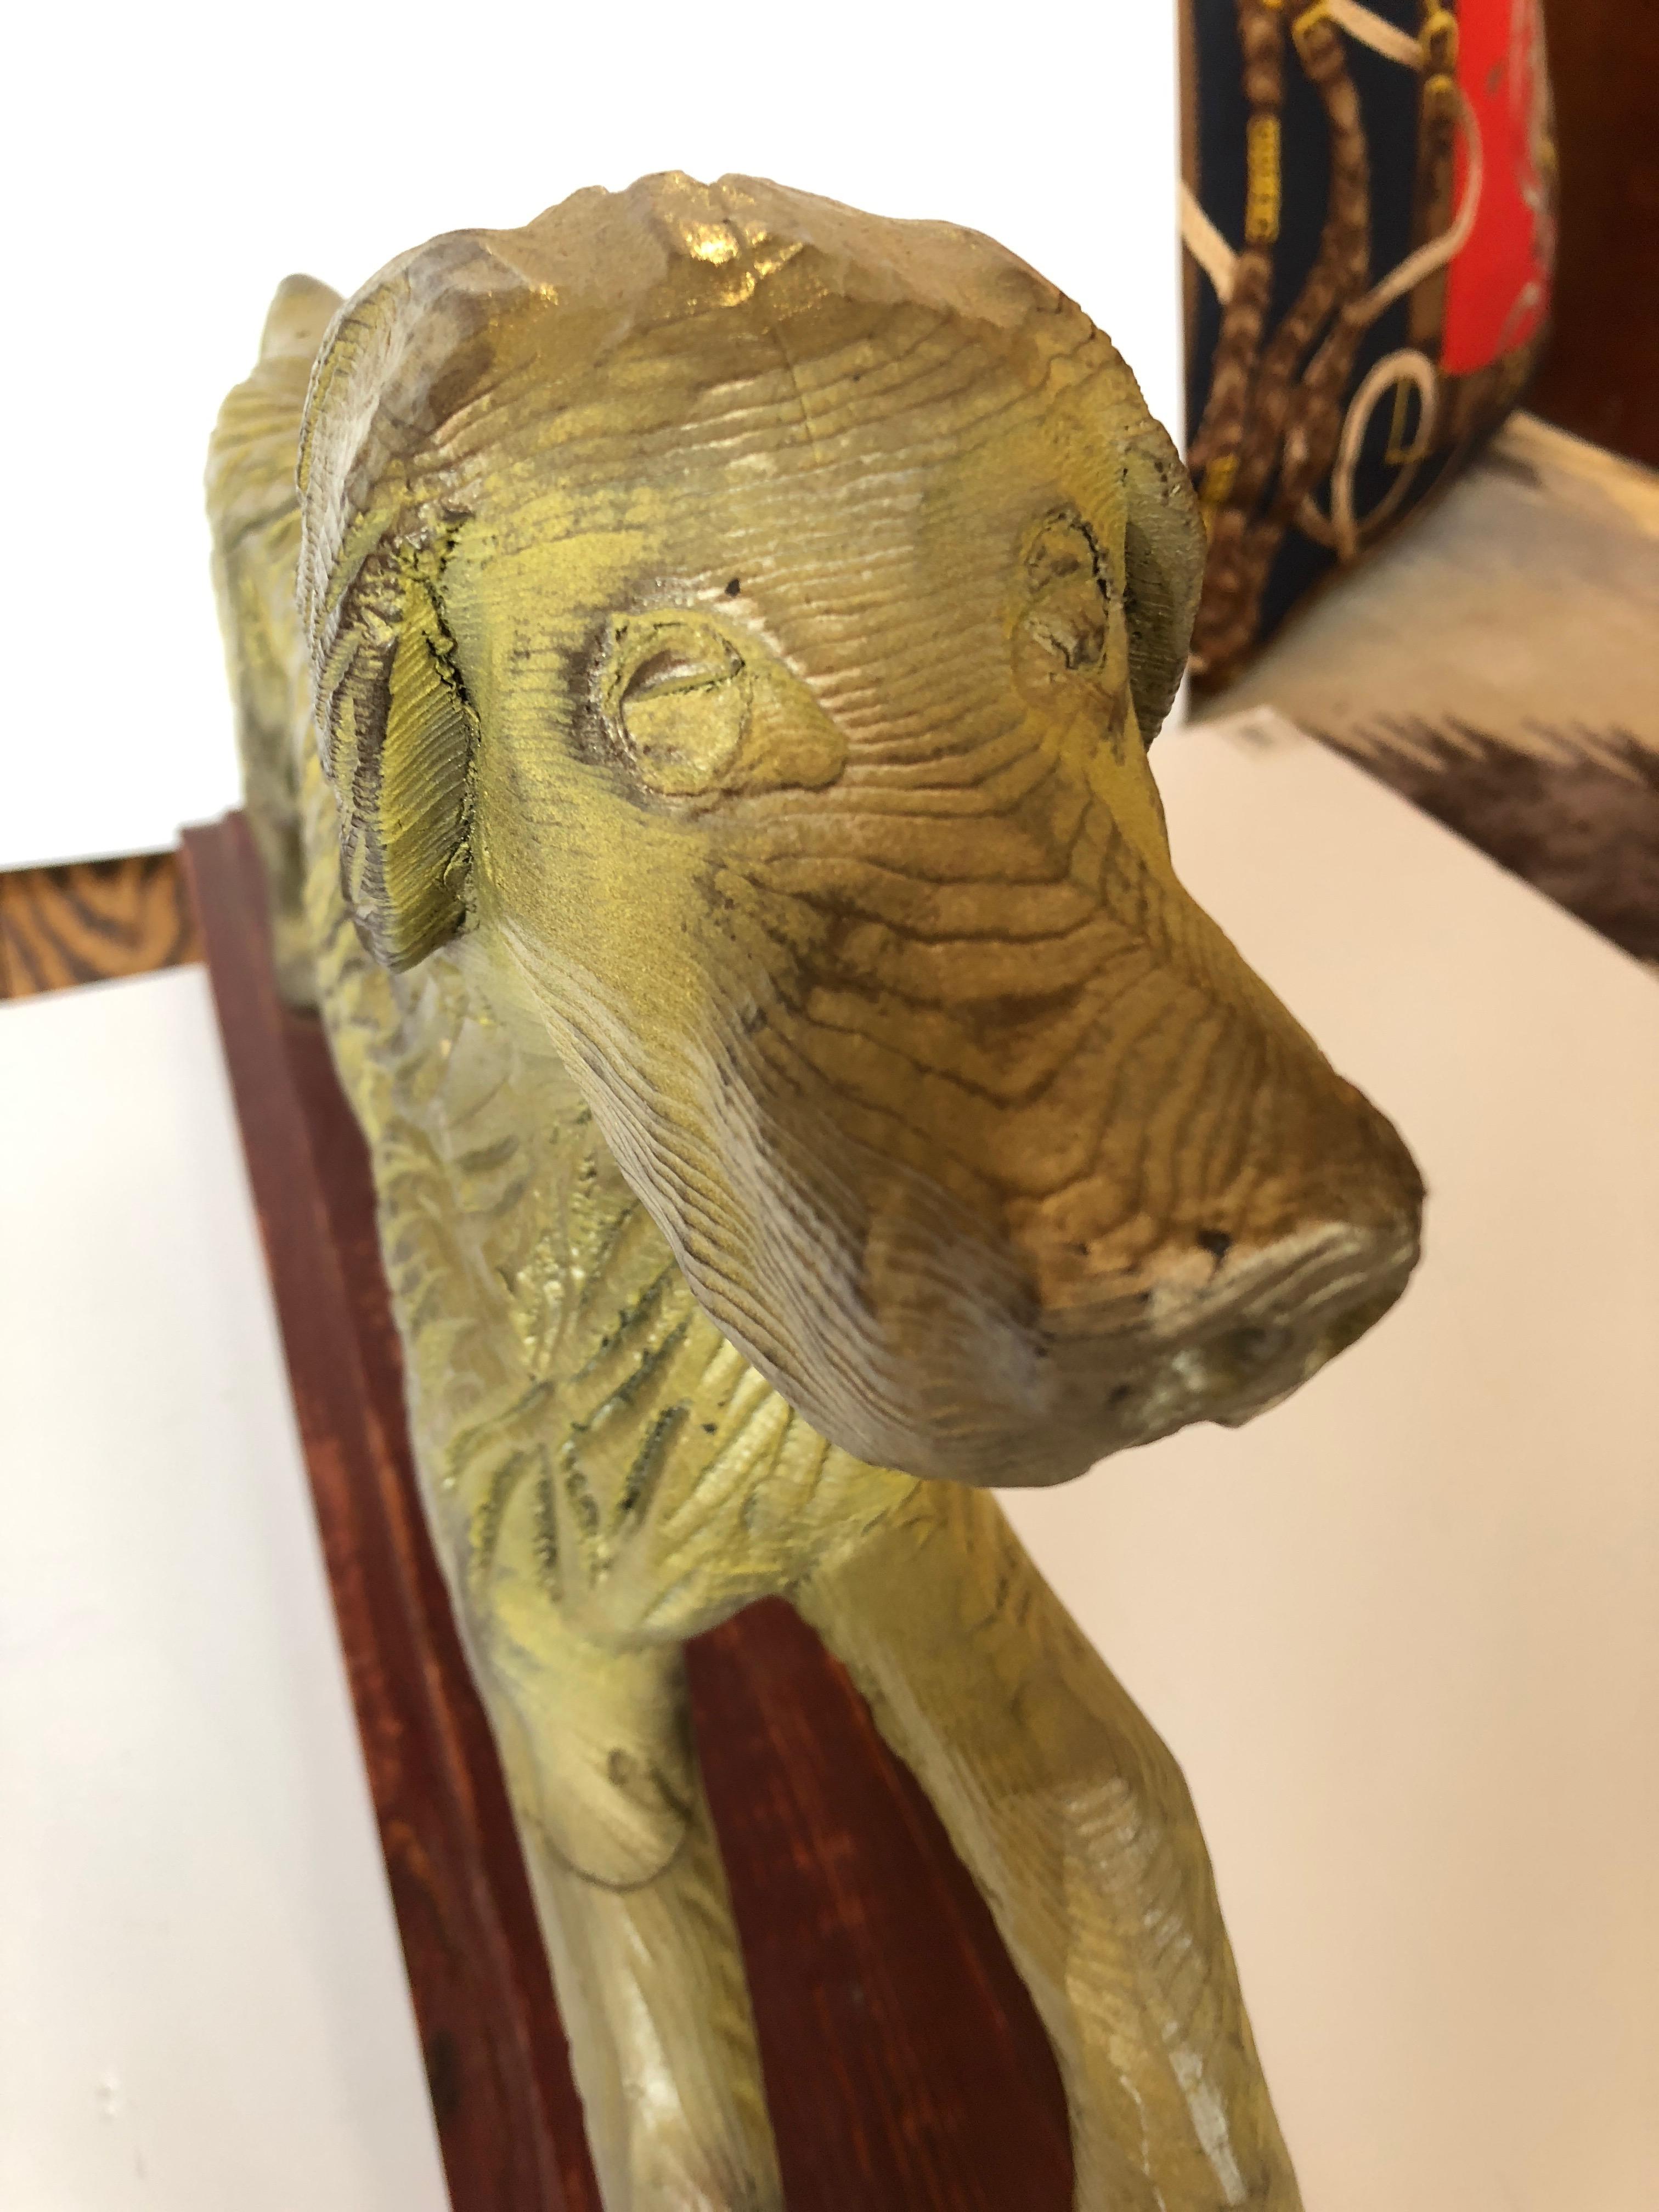 Wood Rustic Vintage Sculpture of a Prancing Retriever Dog